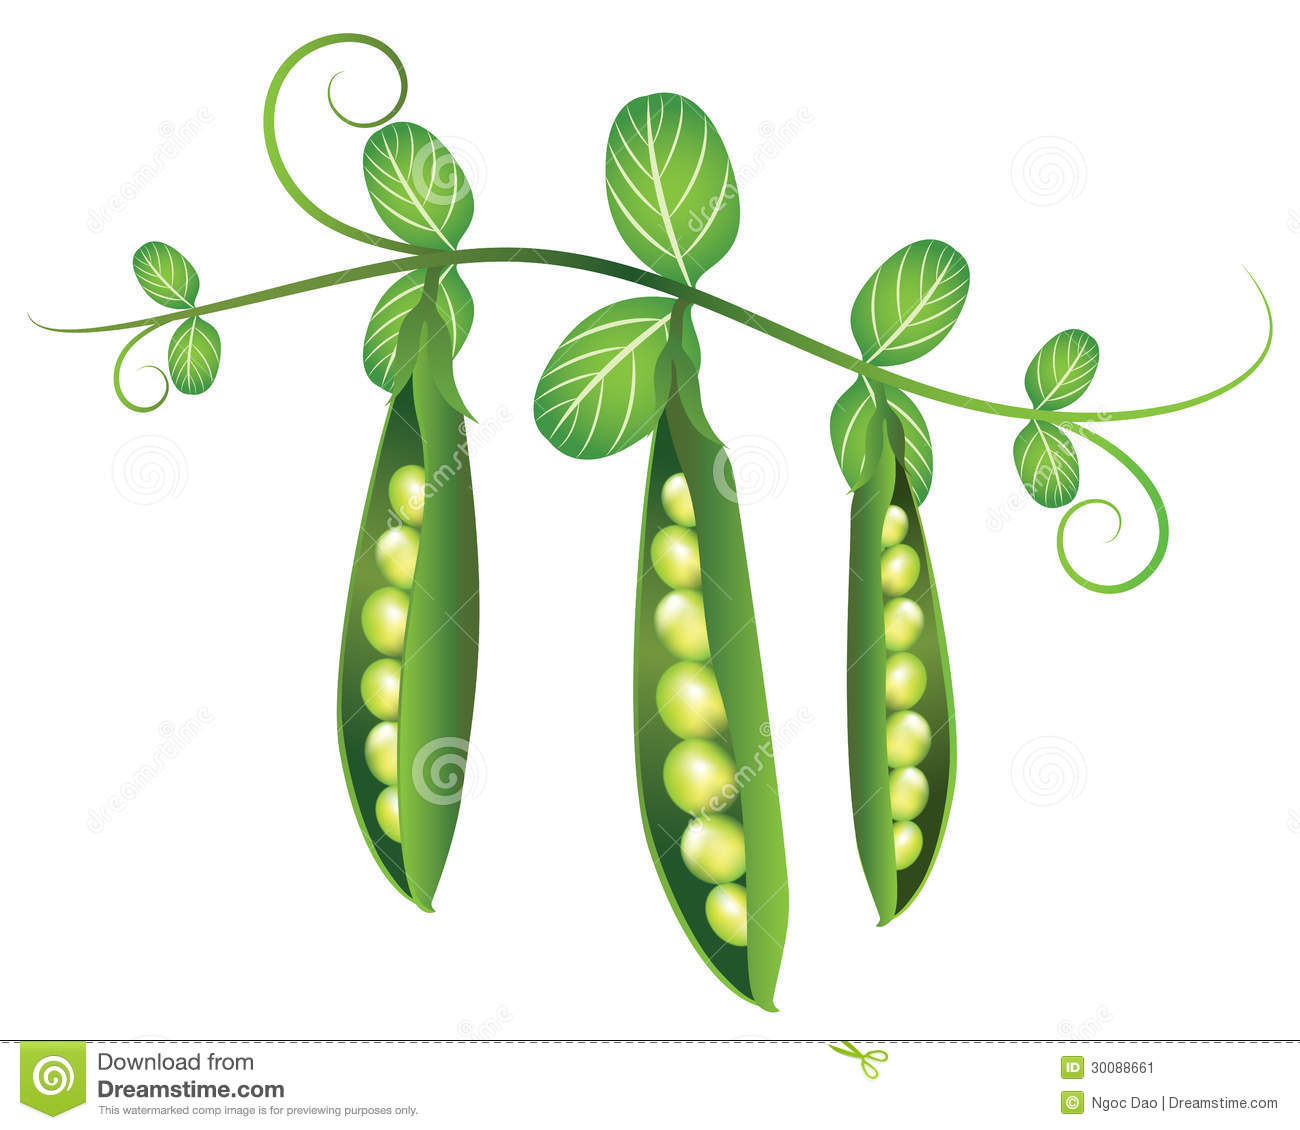 Pea plant clipart.